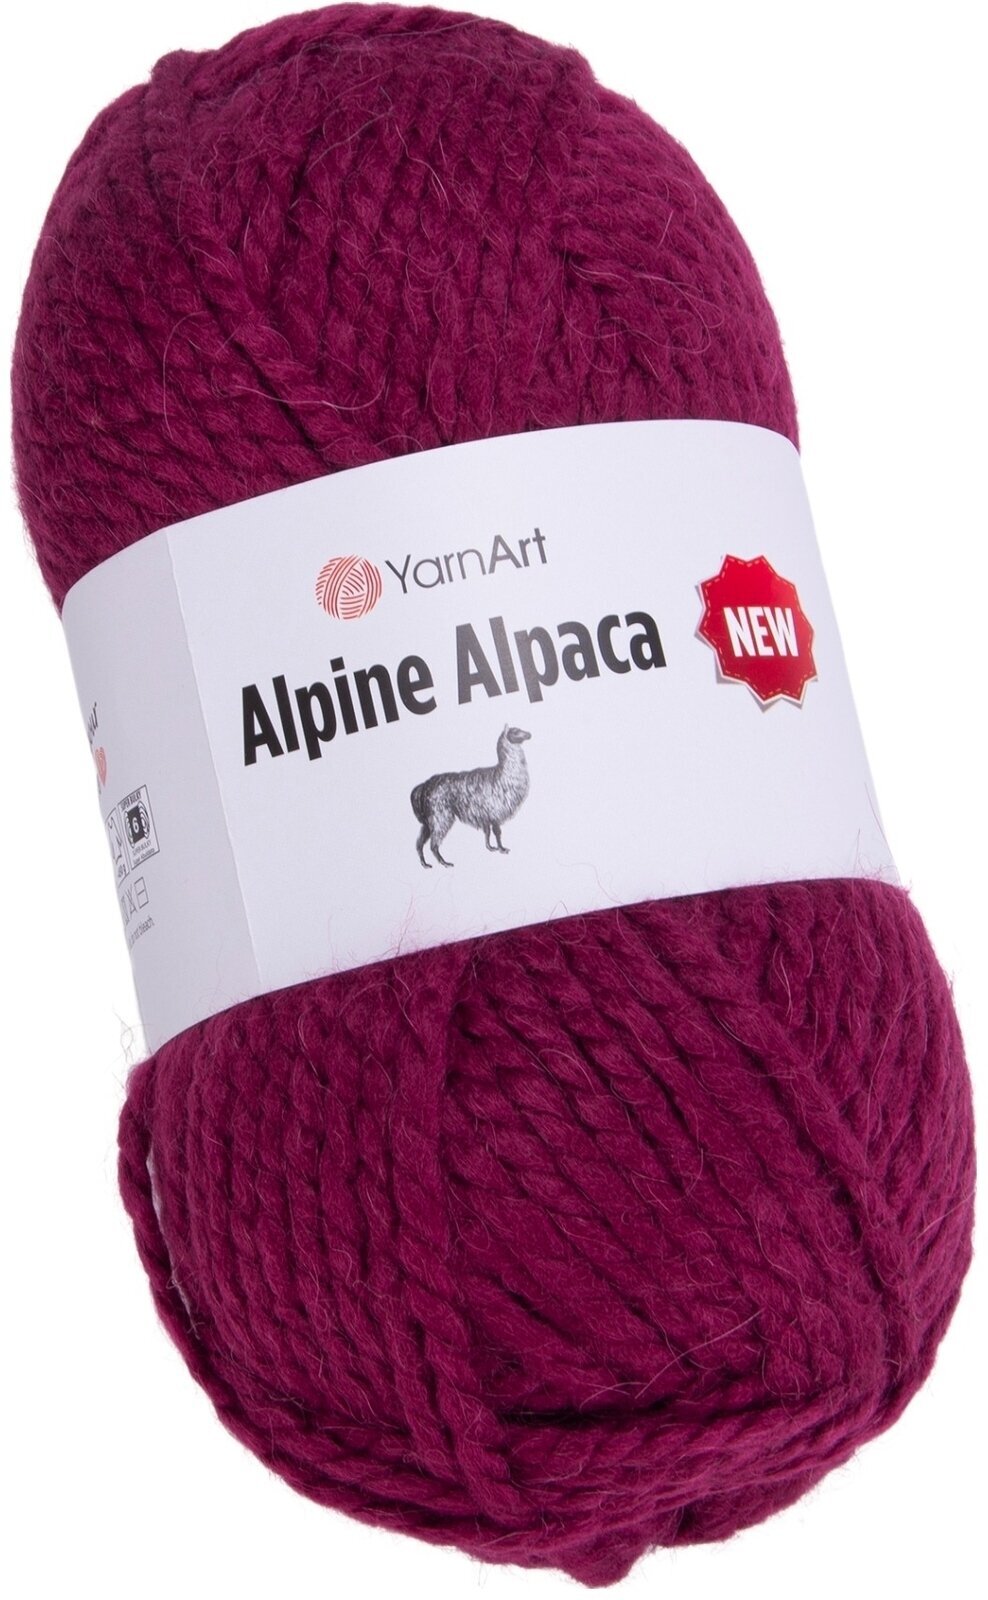 Knitting Yarn Yarn Art Alpine Alpaca 1441